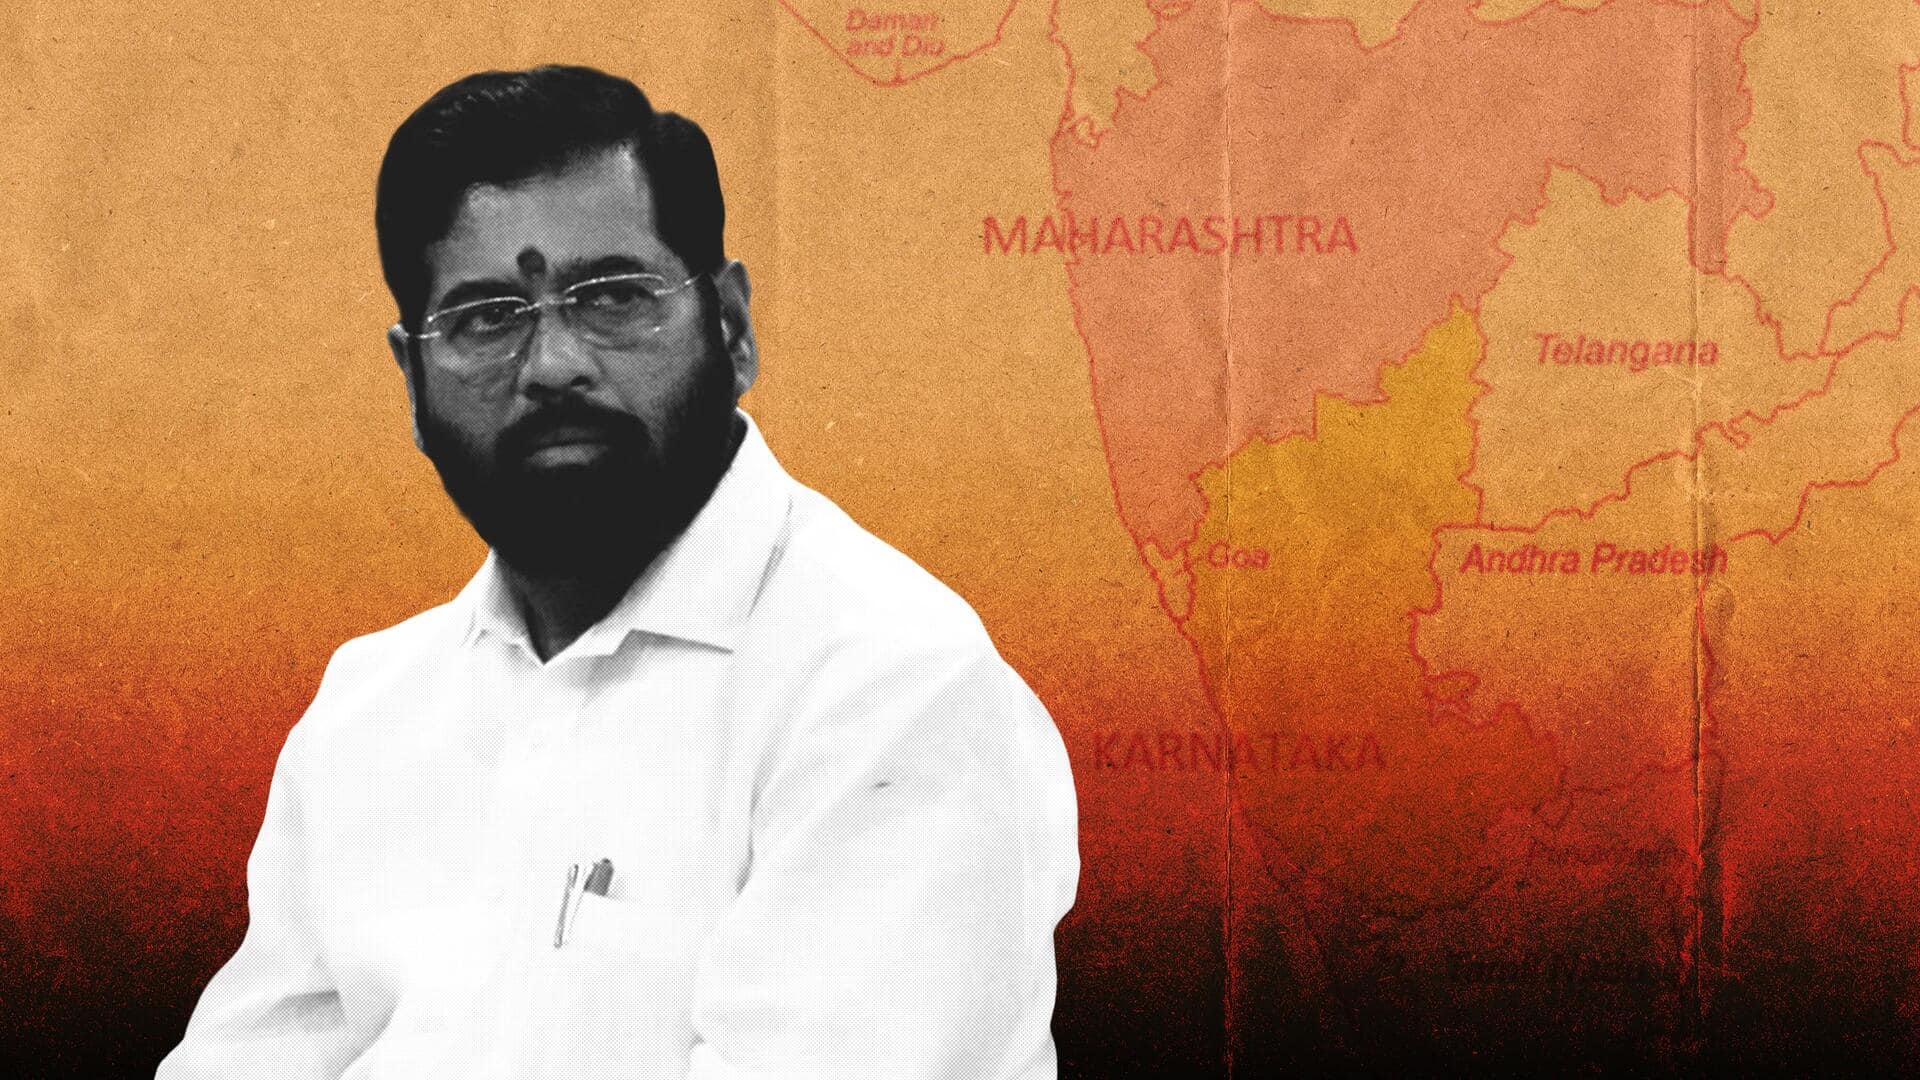 Border dispute: More Maharashtra villages request merger with Karnataka